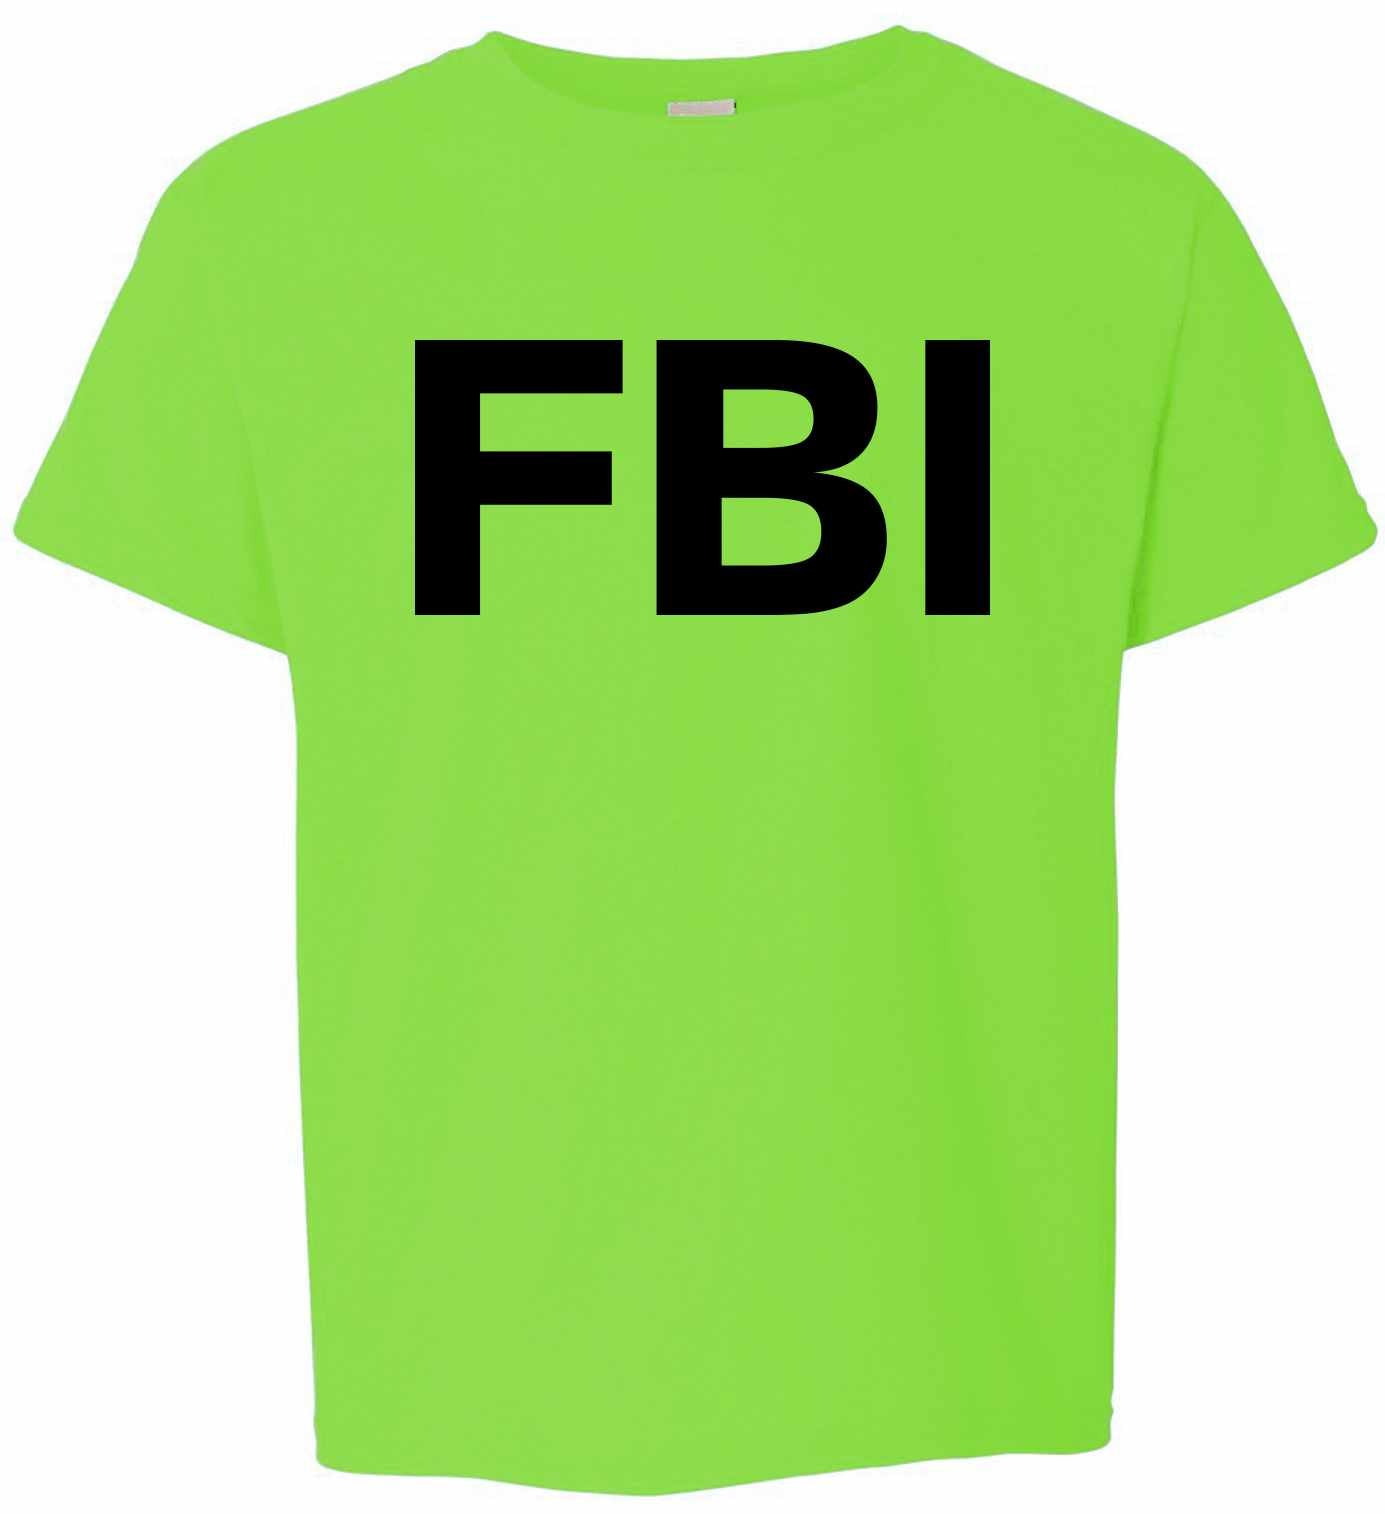 FBI on Kids T-Shirt